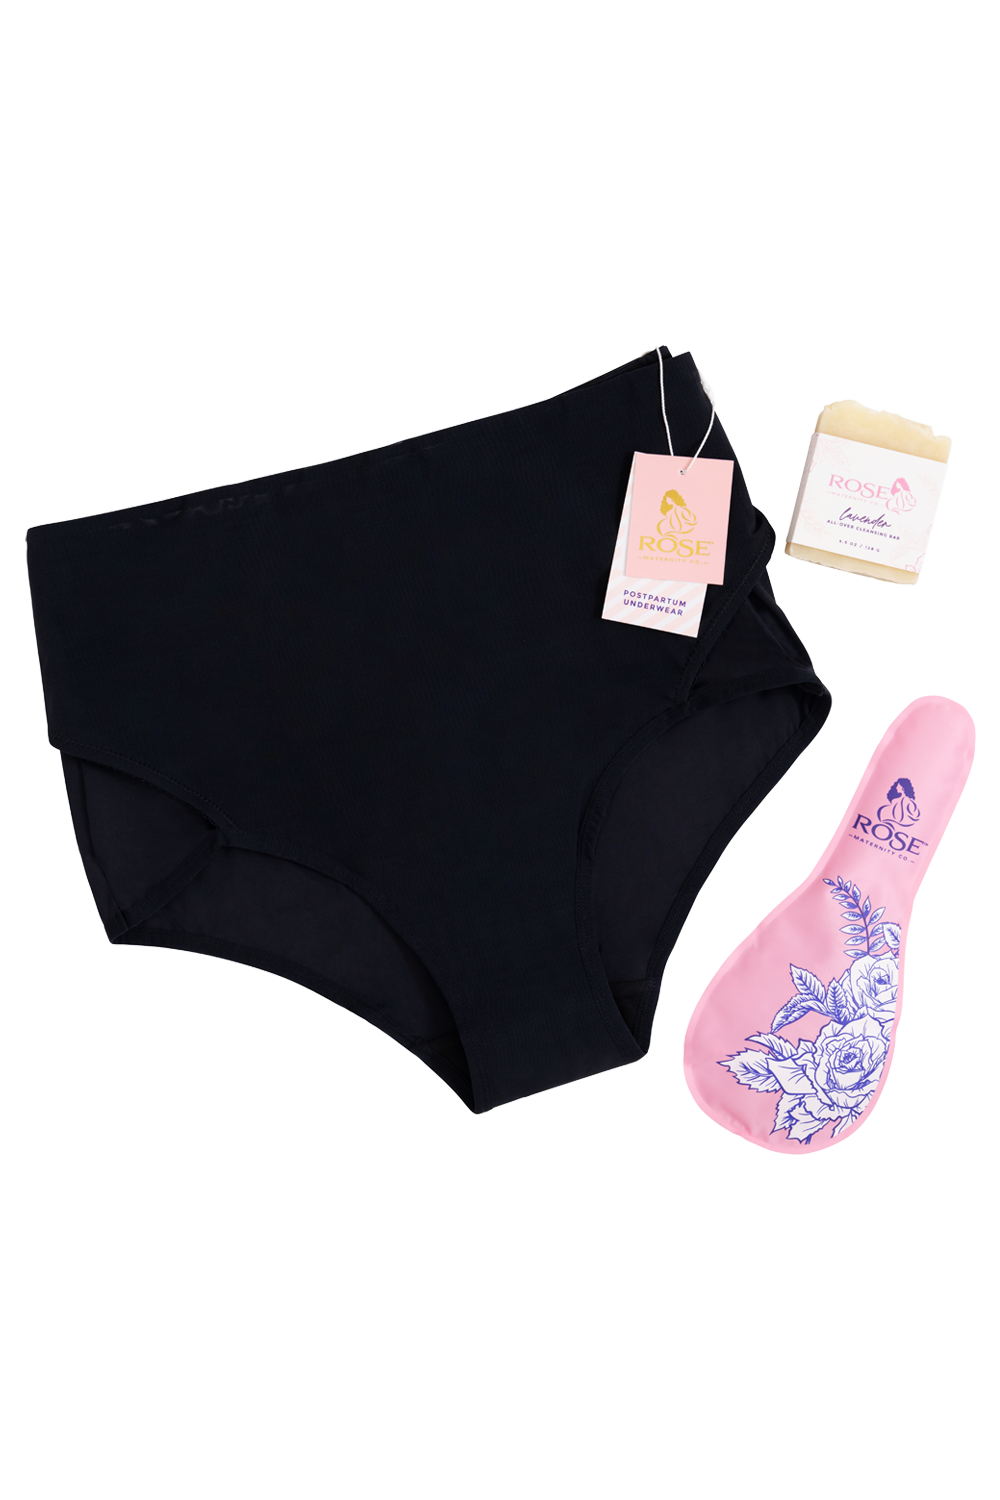 Buy Morph Maternity, Women Postpartum Underwear